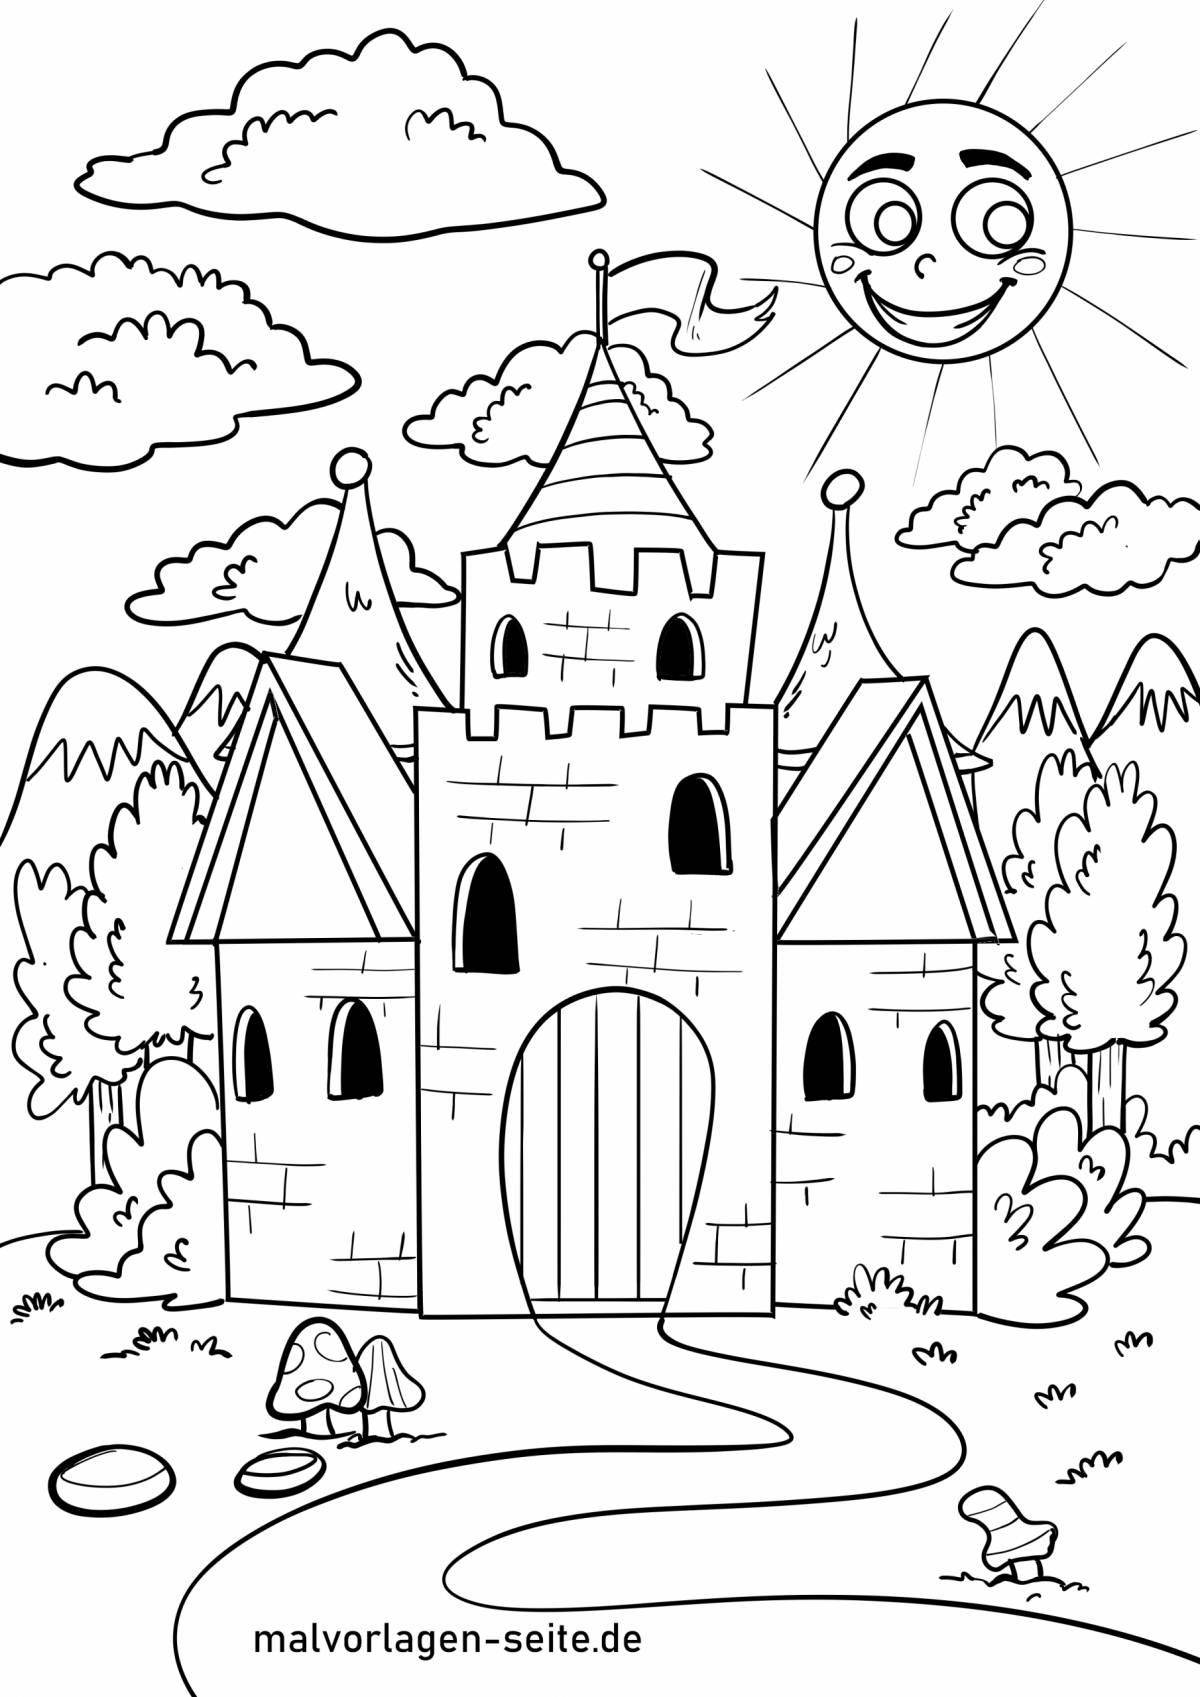 Royal fairytale castle coloring page